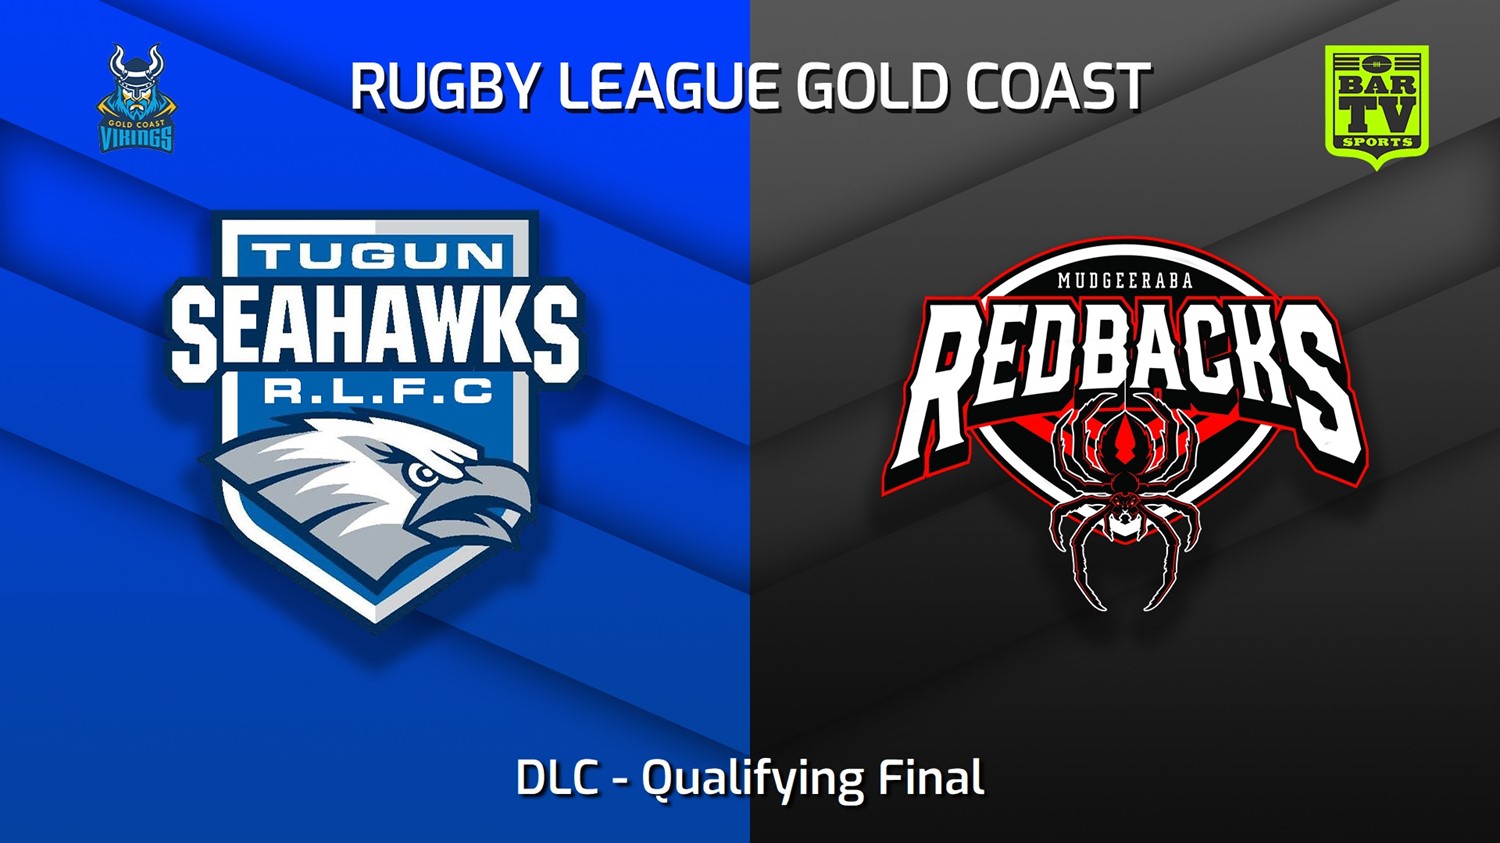 220828-Gold Coast Qualifying Final - DLC - Tugun Seahawks v Mudgeeraba Redbacks Slate Image